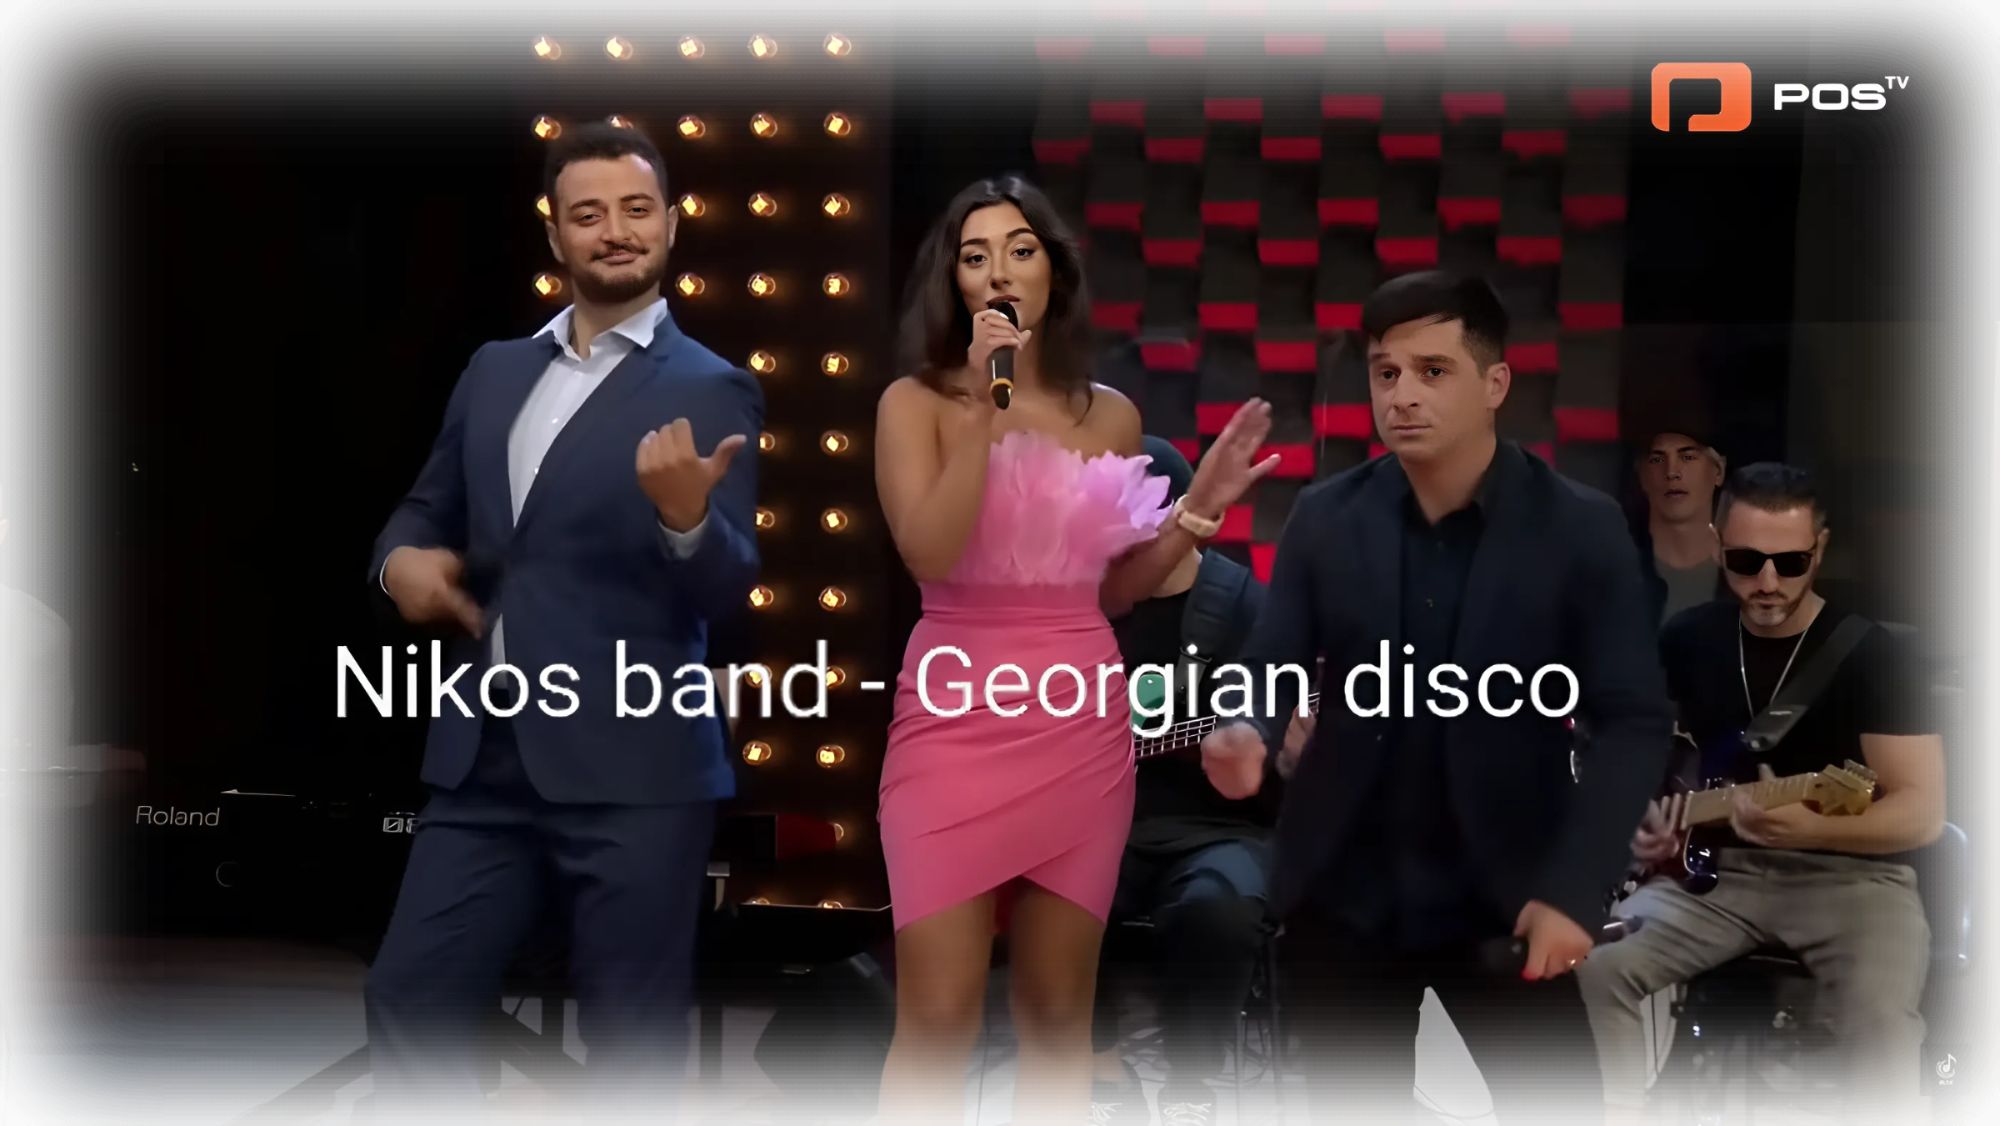 nikos-band-georgian-disco-perevod-teksta-na-russkij-yazyk